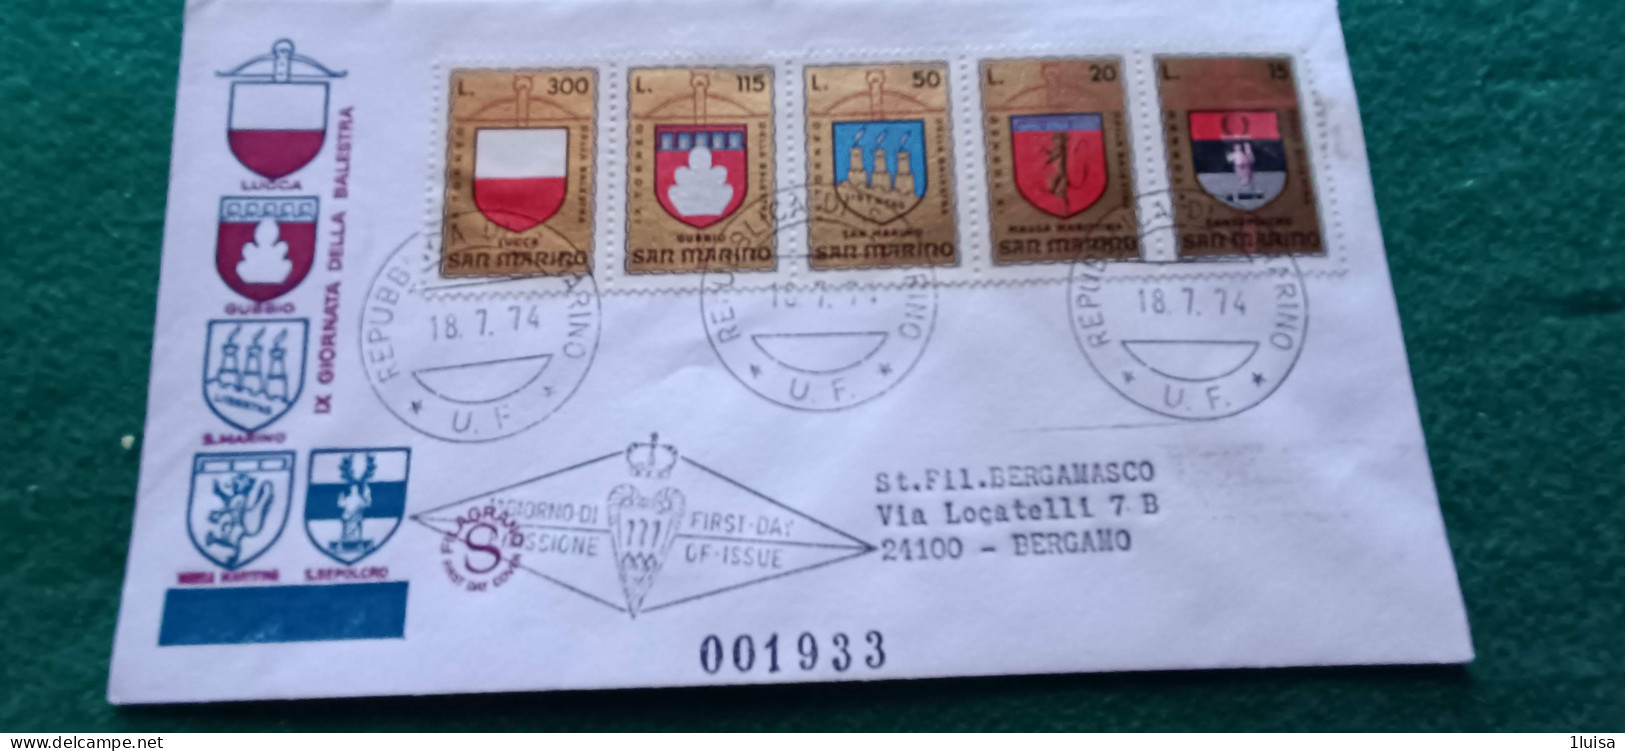 SAN MARINO 18/7/74 Giornata Della Balestra - Express Letter Stamps